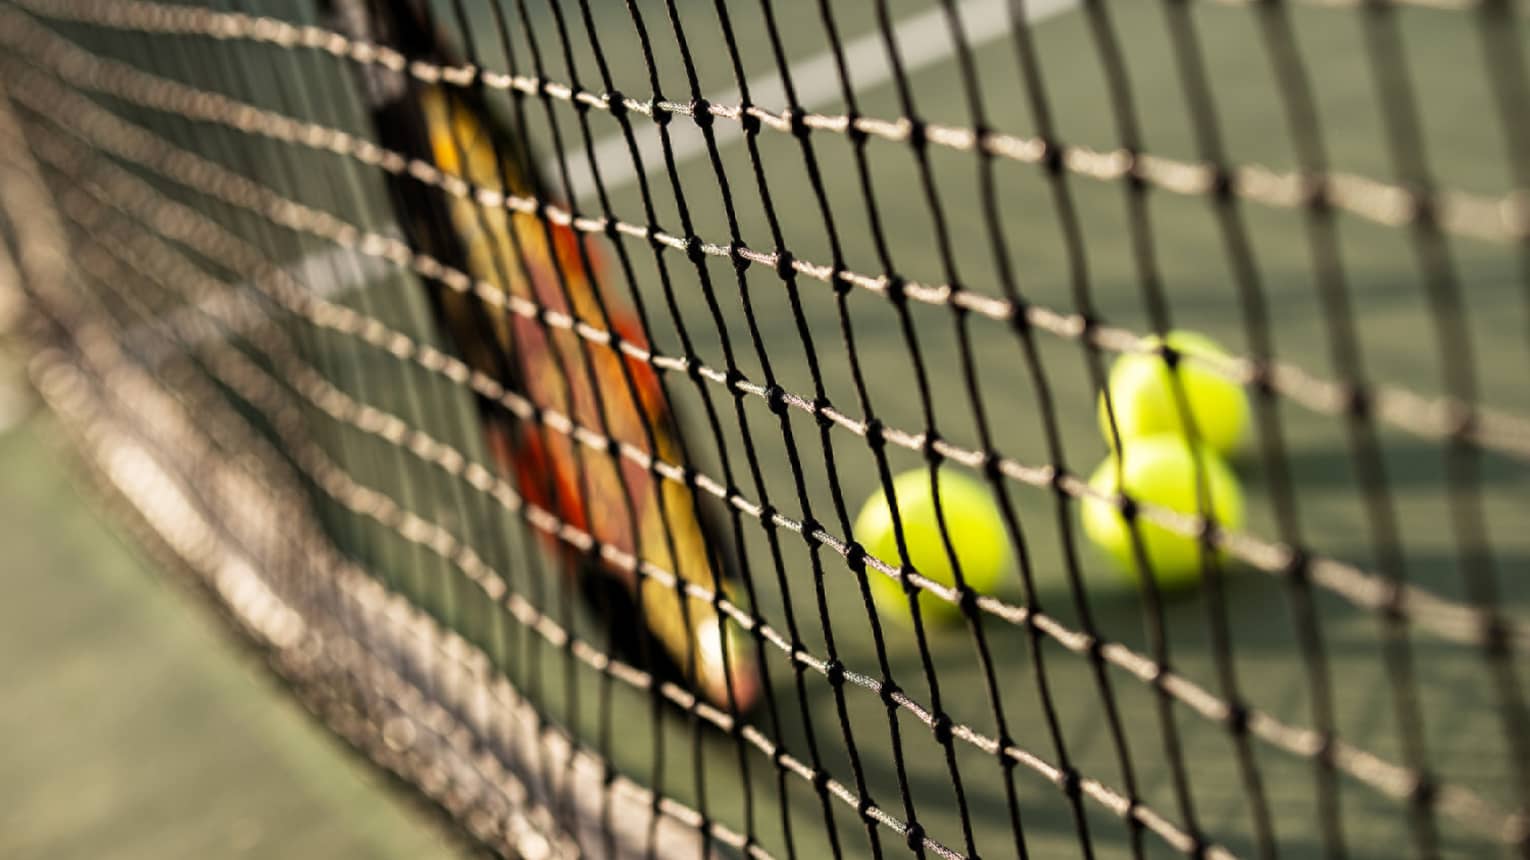 Close-up of tennis racket against net, three green tennis balls on ground